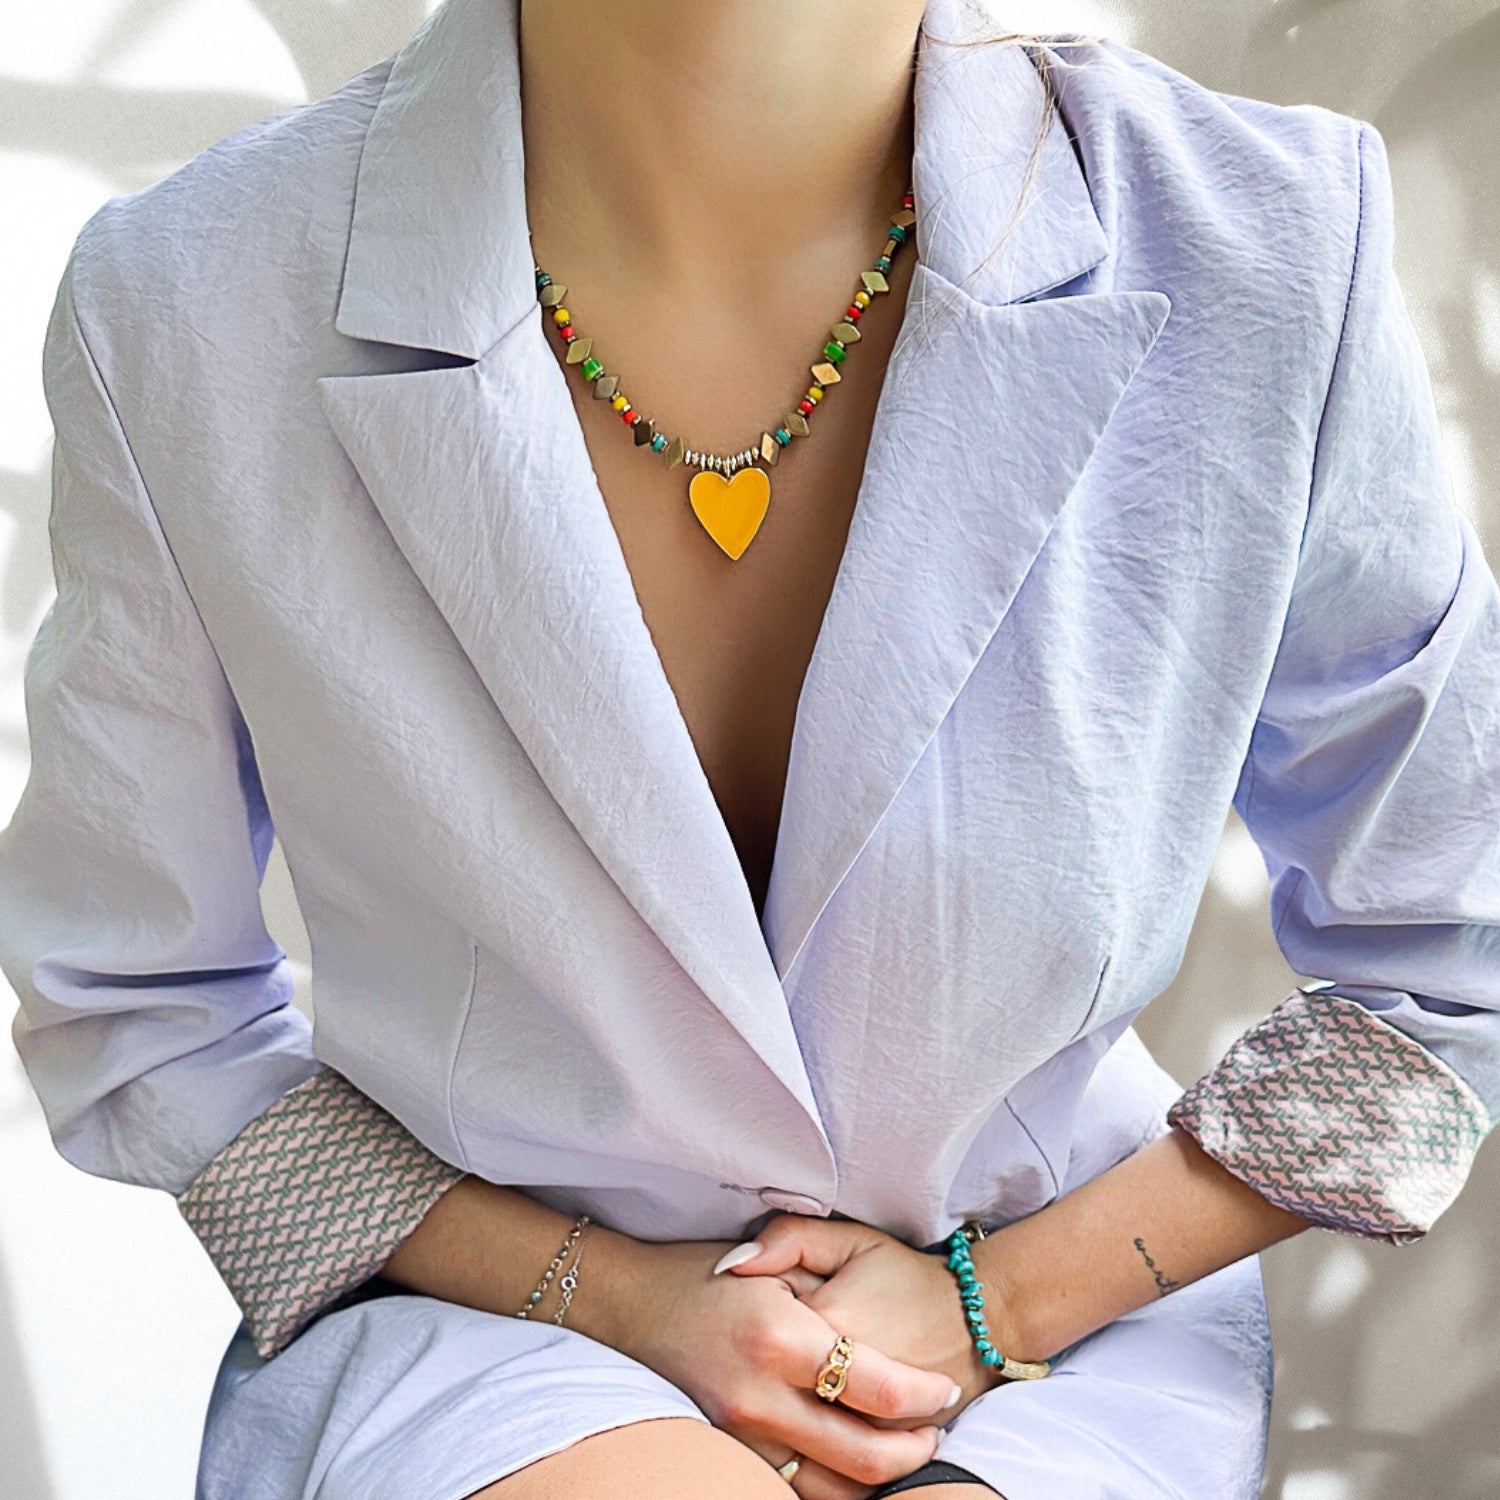 A model joyfully wearing the vibrant Joyful Heartbeat Necklace, adding a playful touch to her ensemble.